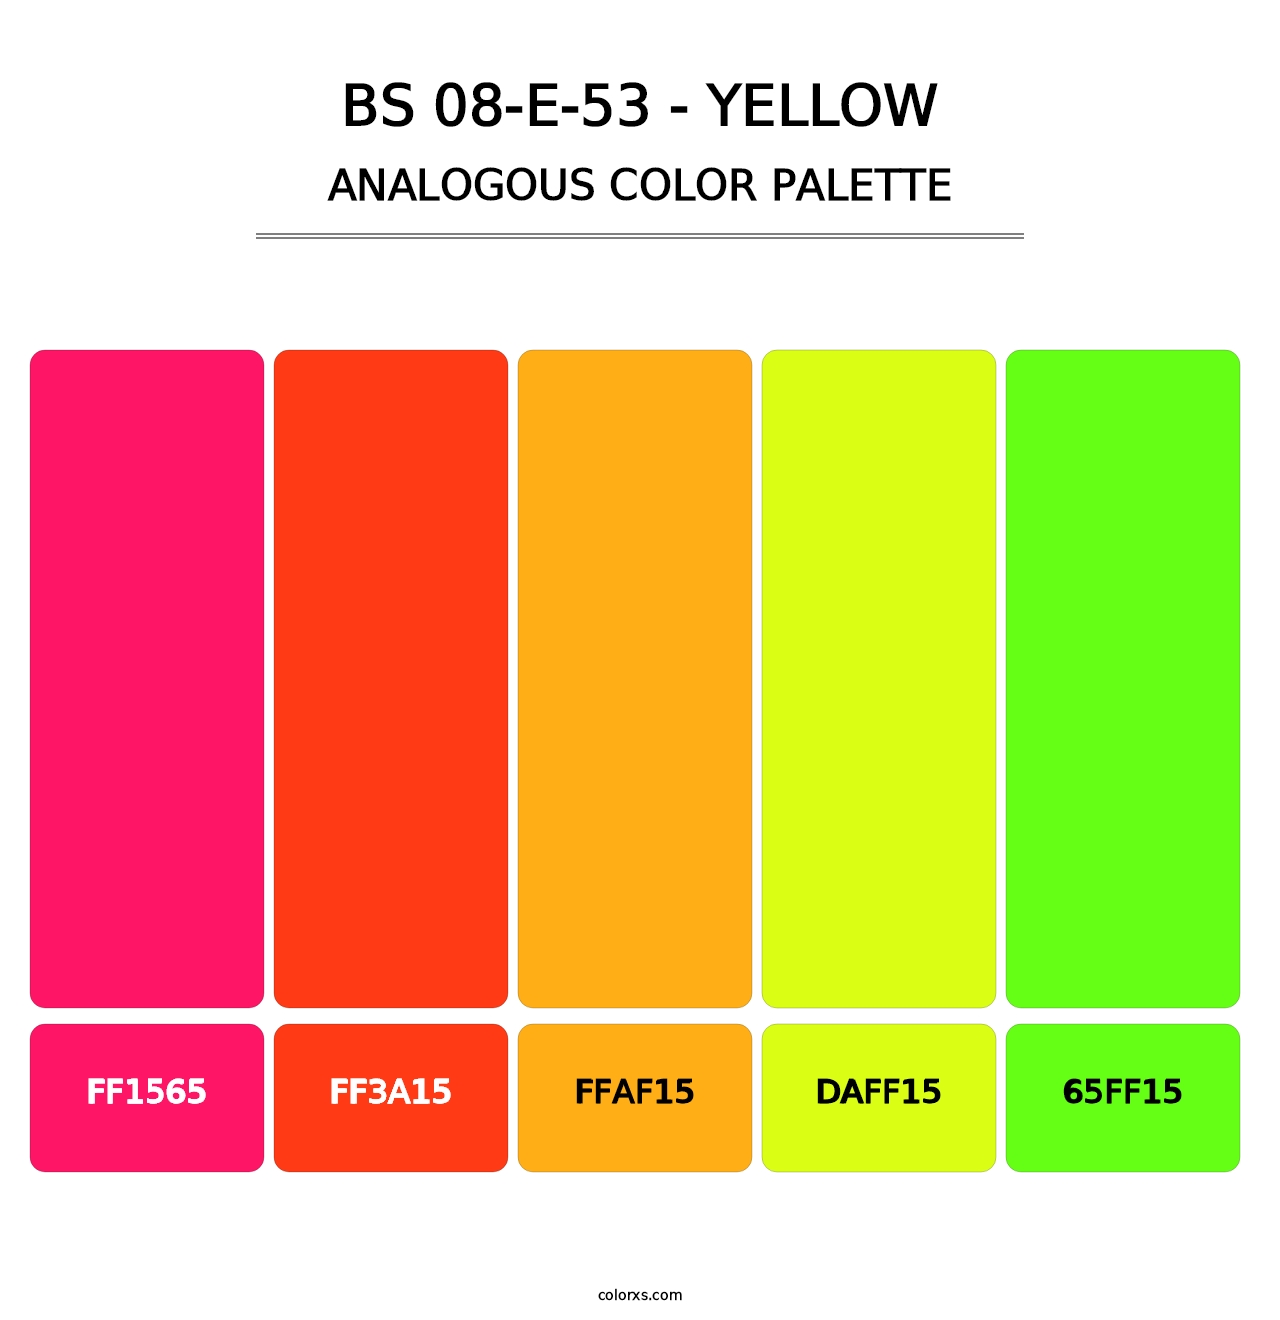 BS 08-E-53 - Yellow - Analogous Color Palette